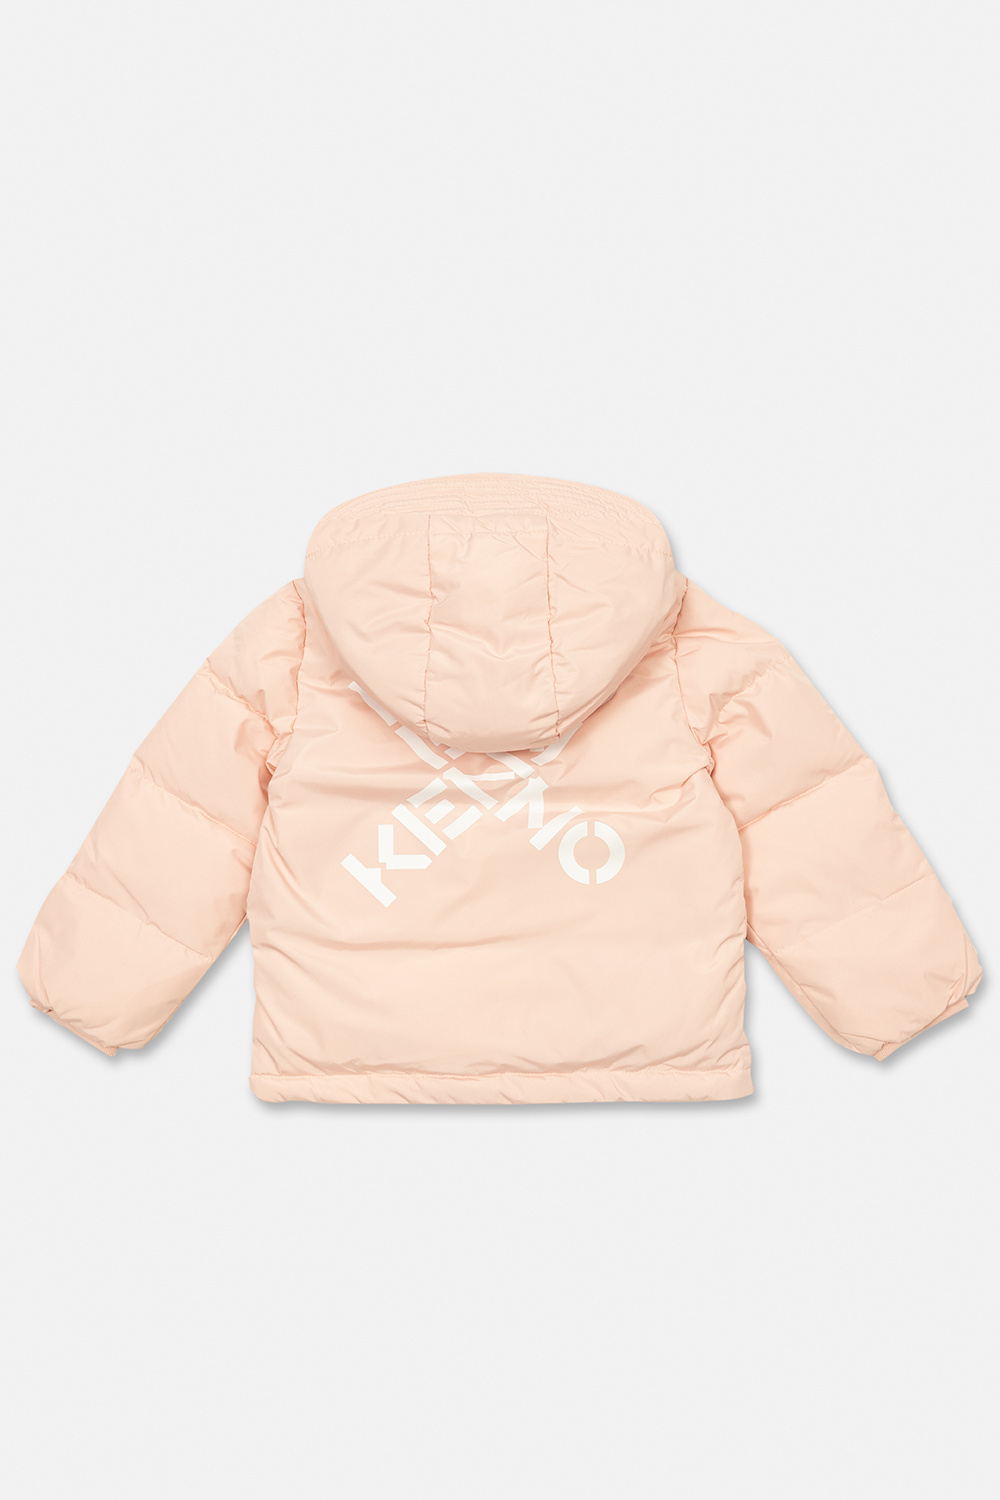 Kenzo Kids cotton flaming heart sweatshirt